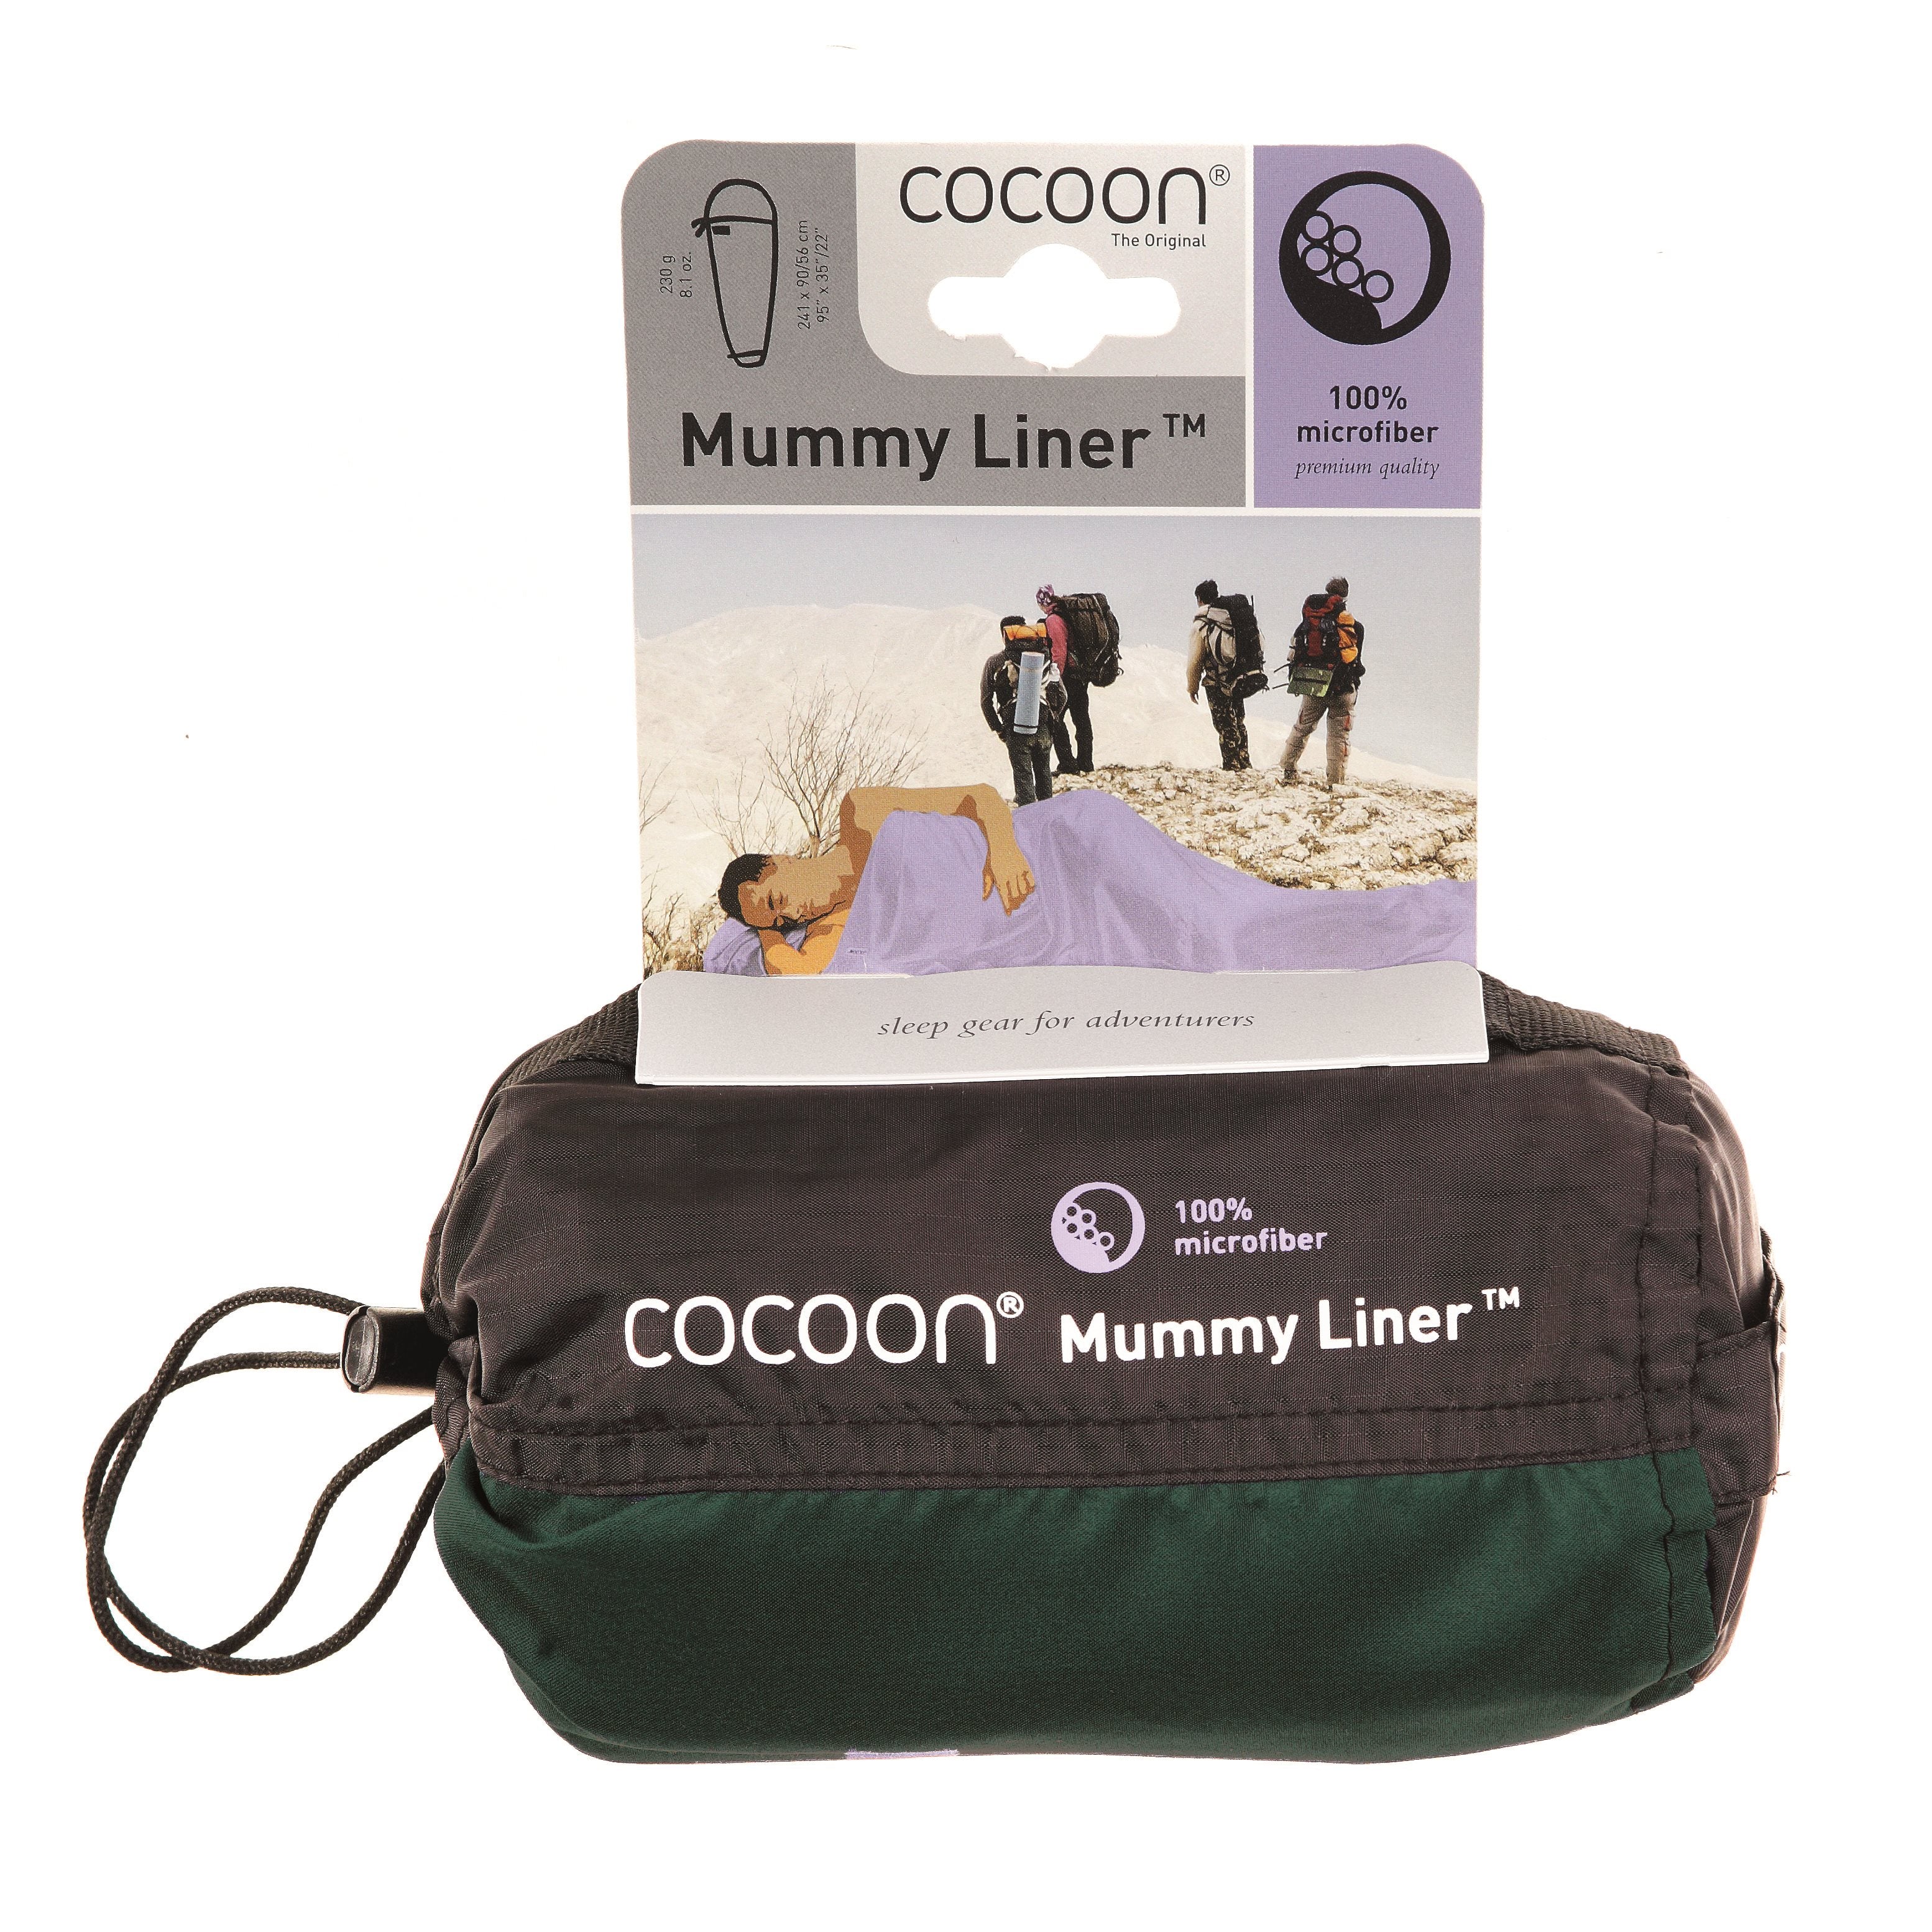 Cocoon Mummyliner 100% Microfiber - Moss green Lakenzak - Reisartikelen-nl